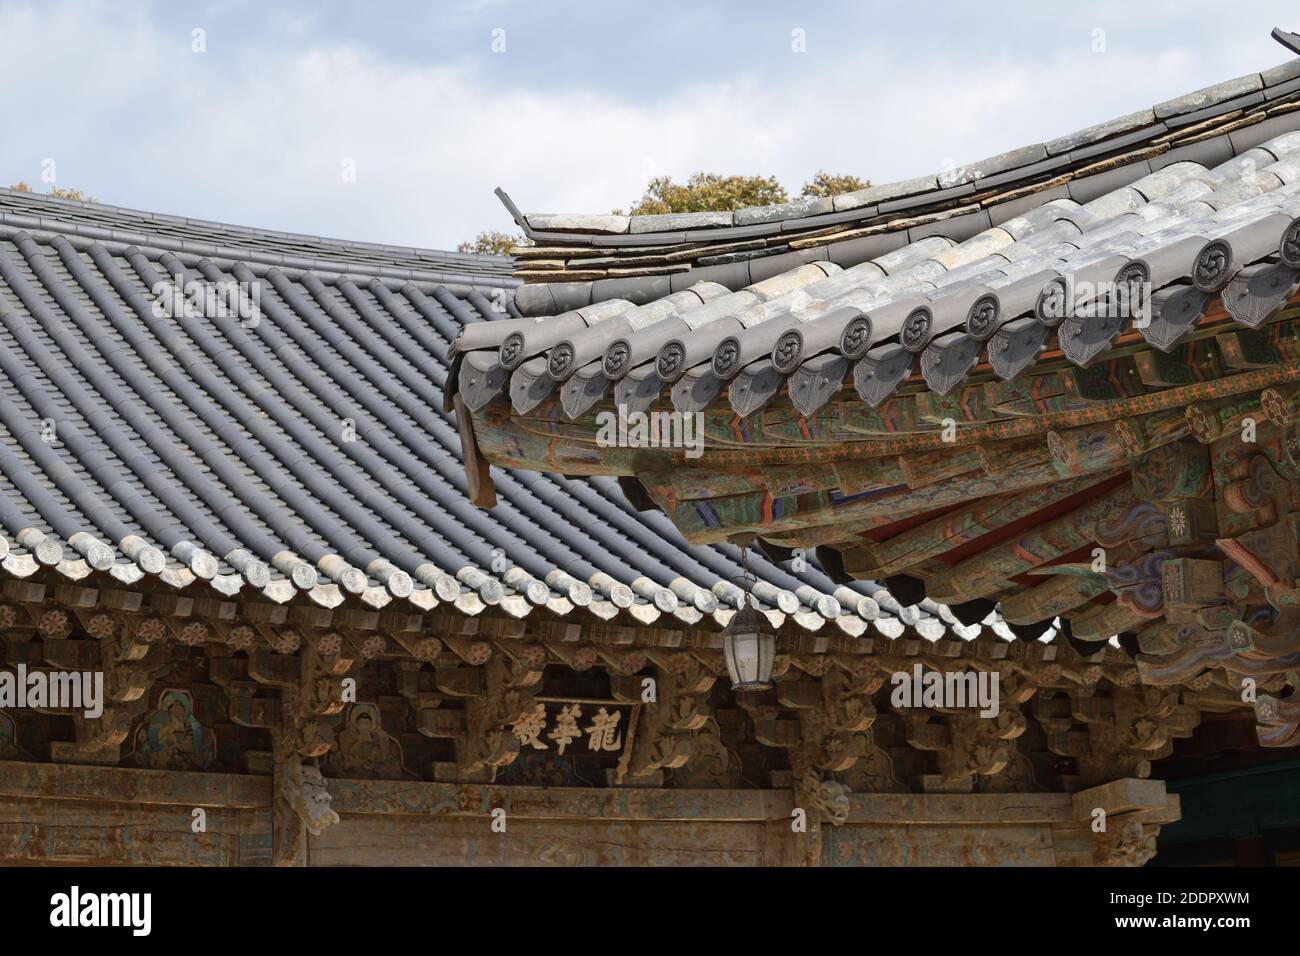 Roofs of Tongdosa Temple near Yangsan, South Gyeongsang Province, Korea. Inscription: 龍華殿 'Maitreya Hall' Stock Photo